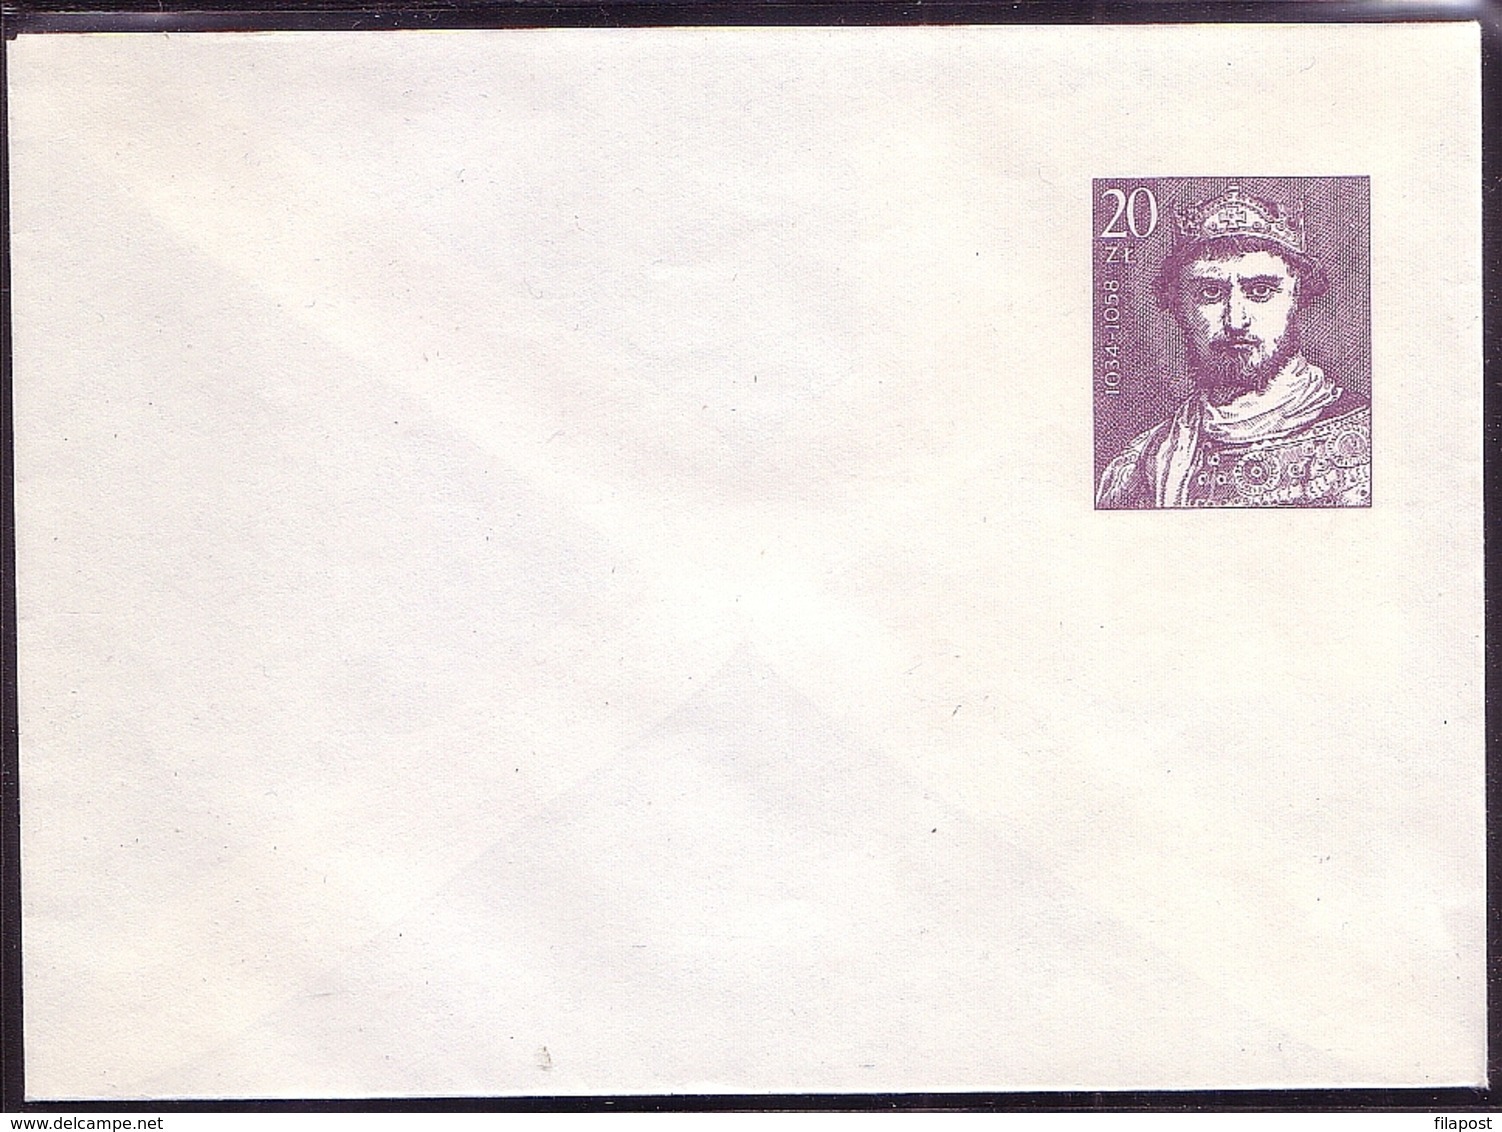 Poland 1988  Fi Ck 85 Error On The Stamp. No Olive Color Mint. King K. Odnowiciel Fotoatest Wysocki PZF - Varietà E Curiosità